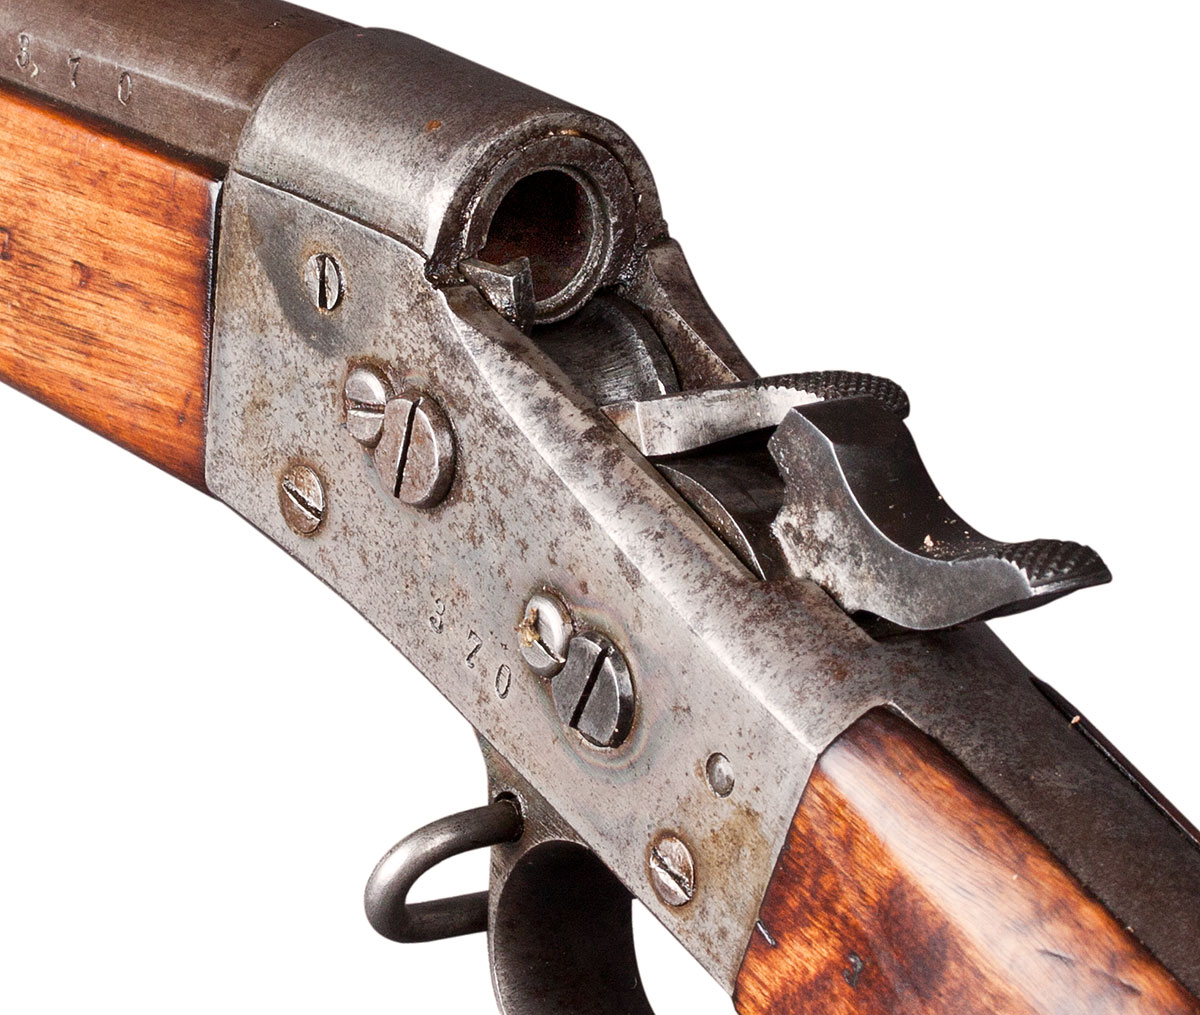 1864 remington rolling block rifle value